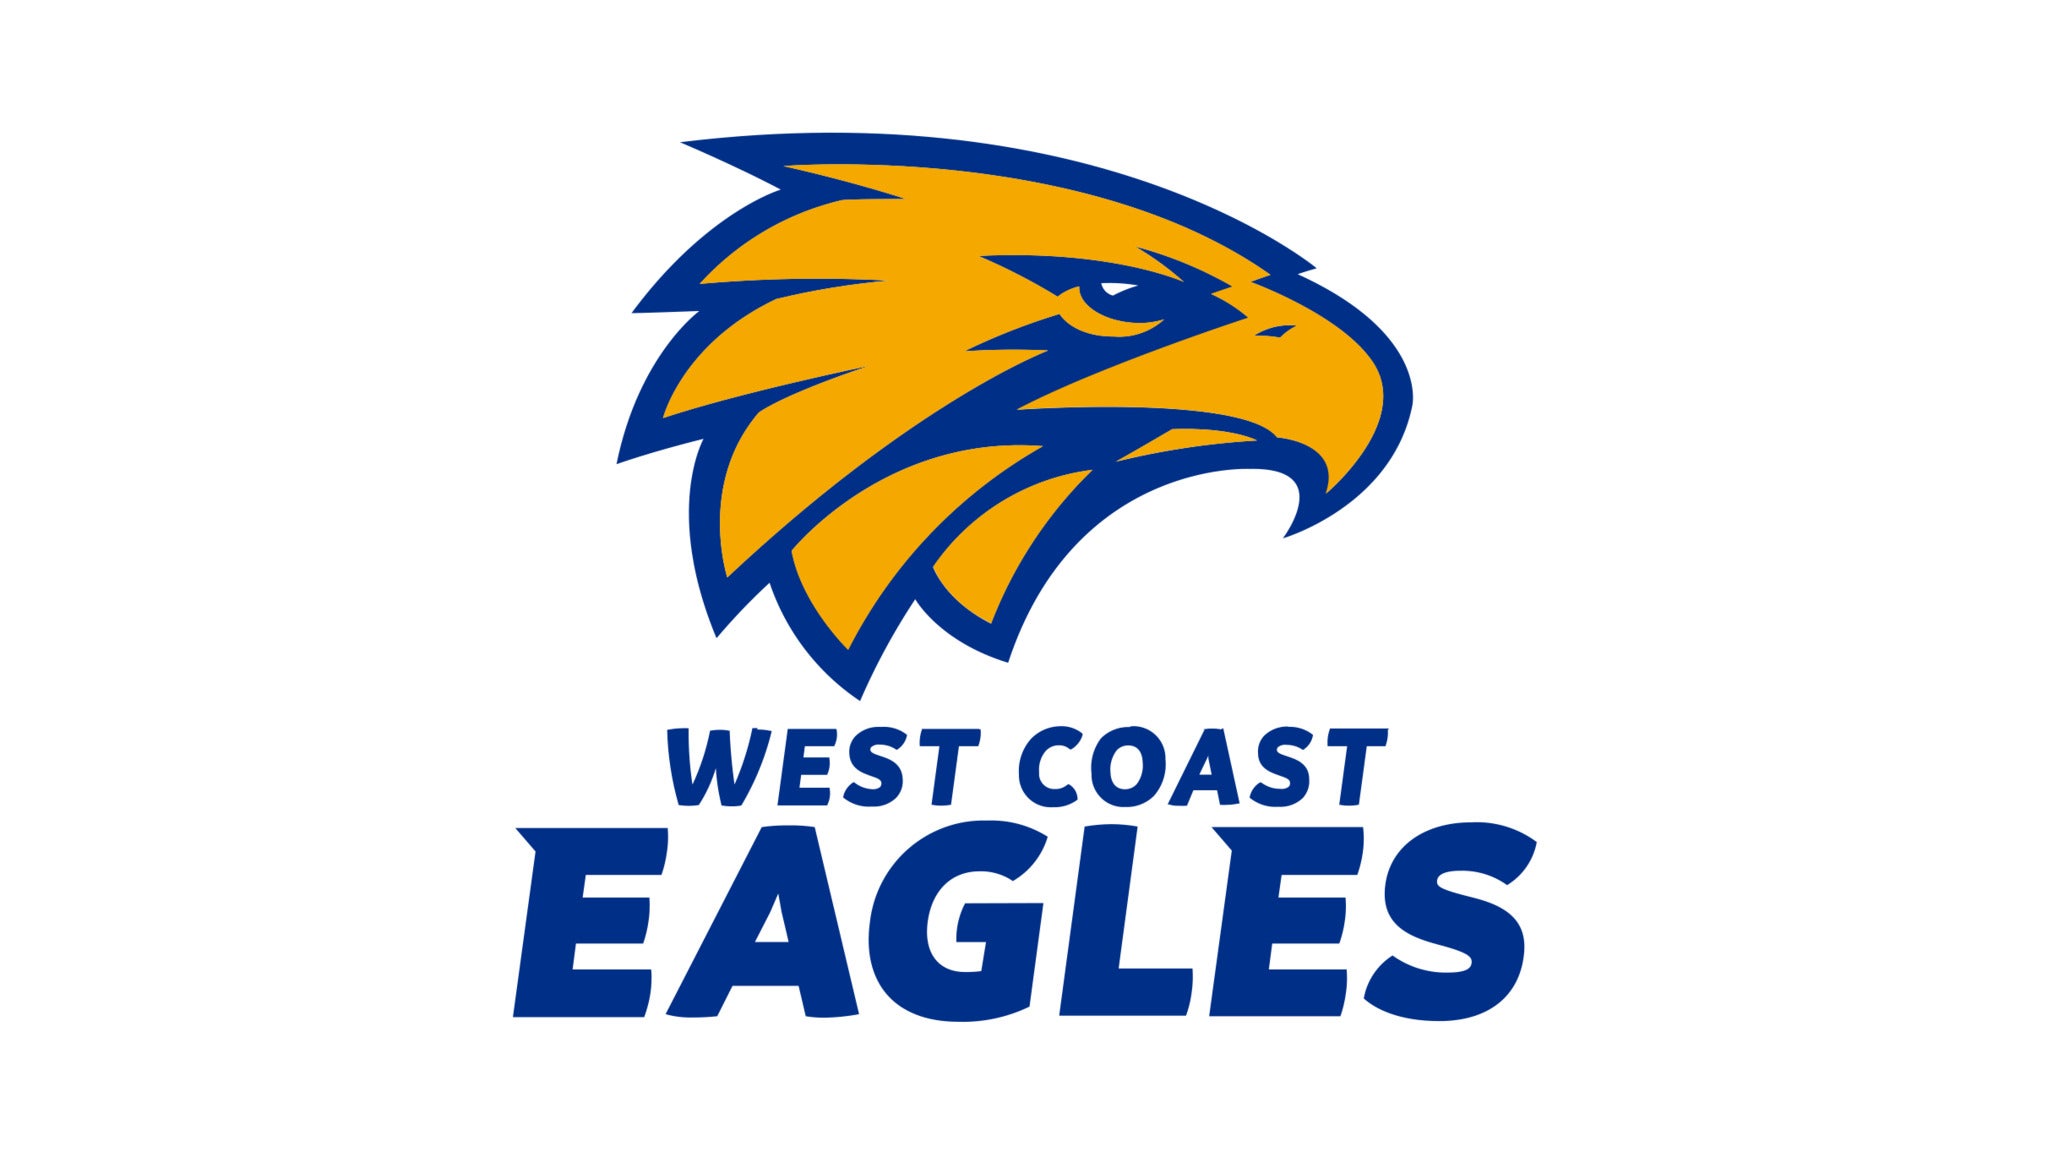 West Coast Eagles v Gold Coast SUNS in Burswood promo photo for Flexi Members presale offer code